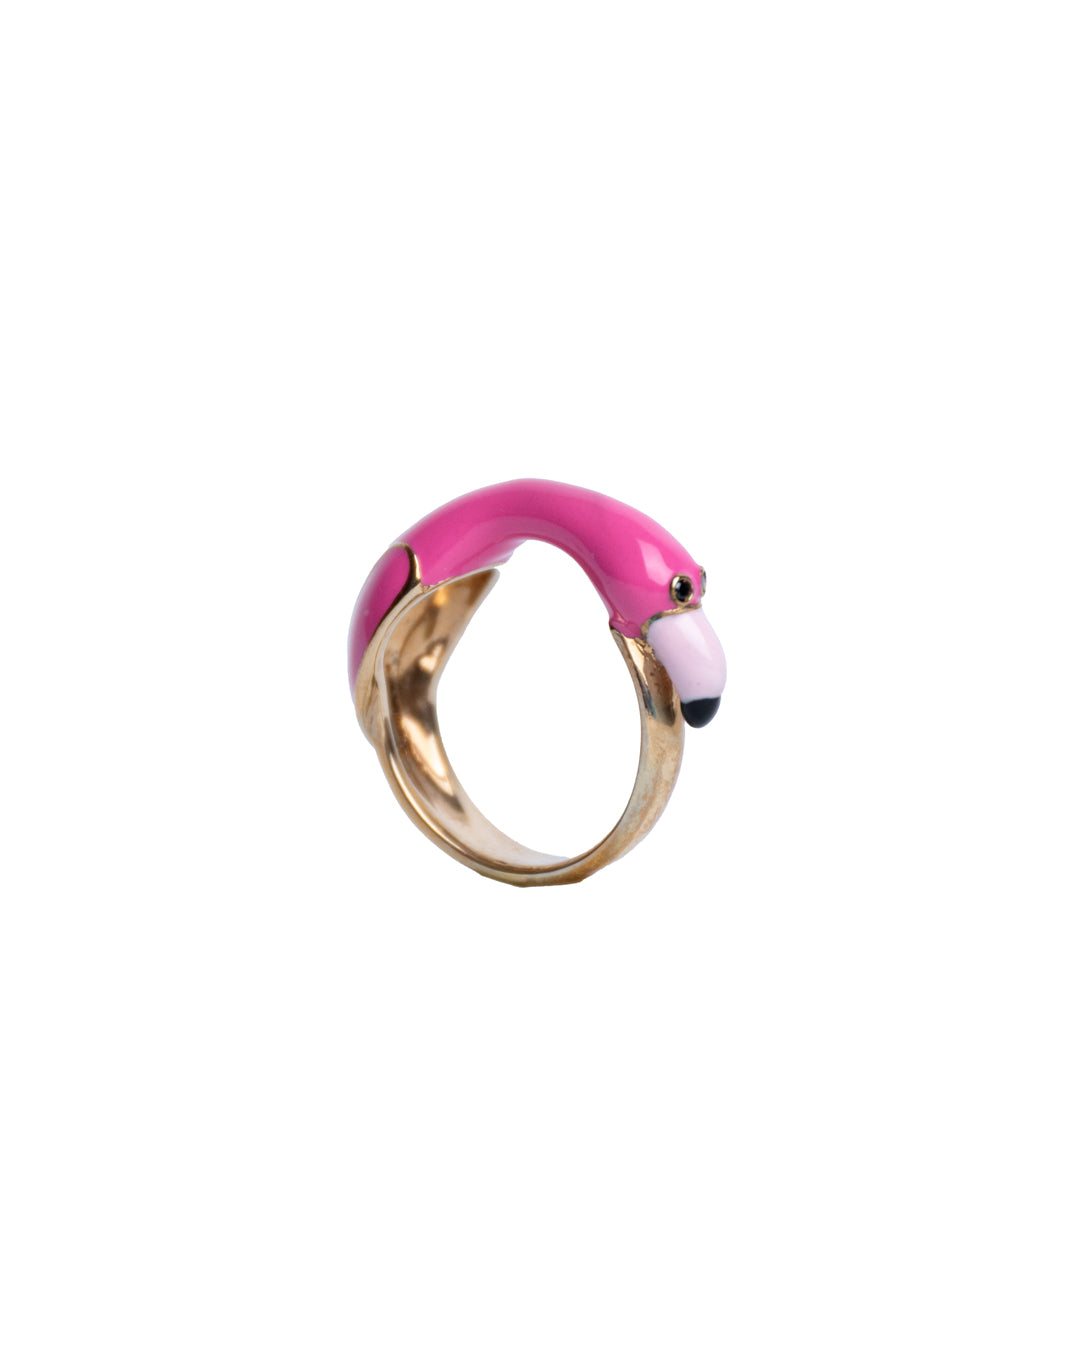 Flamingo pink ring handmade handcrafted